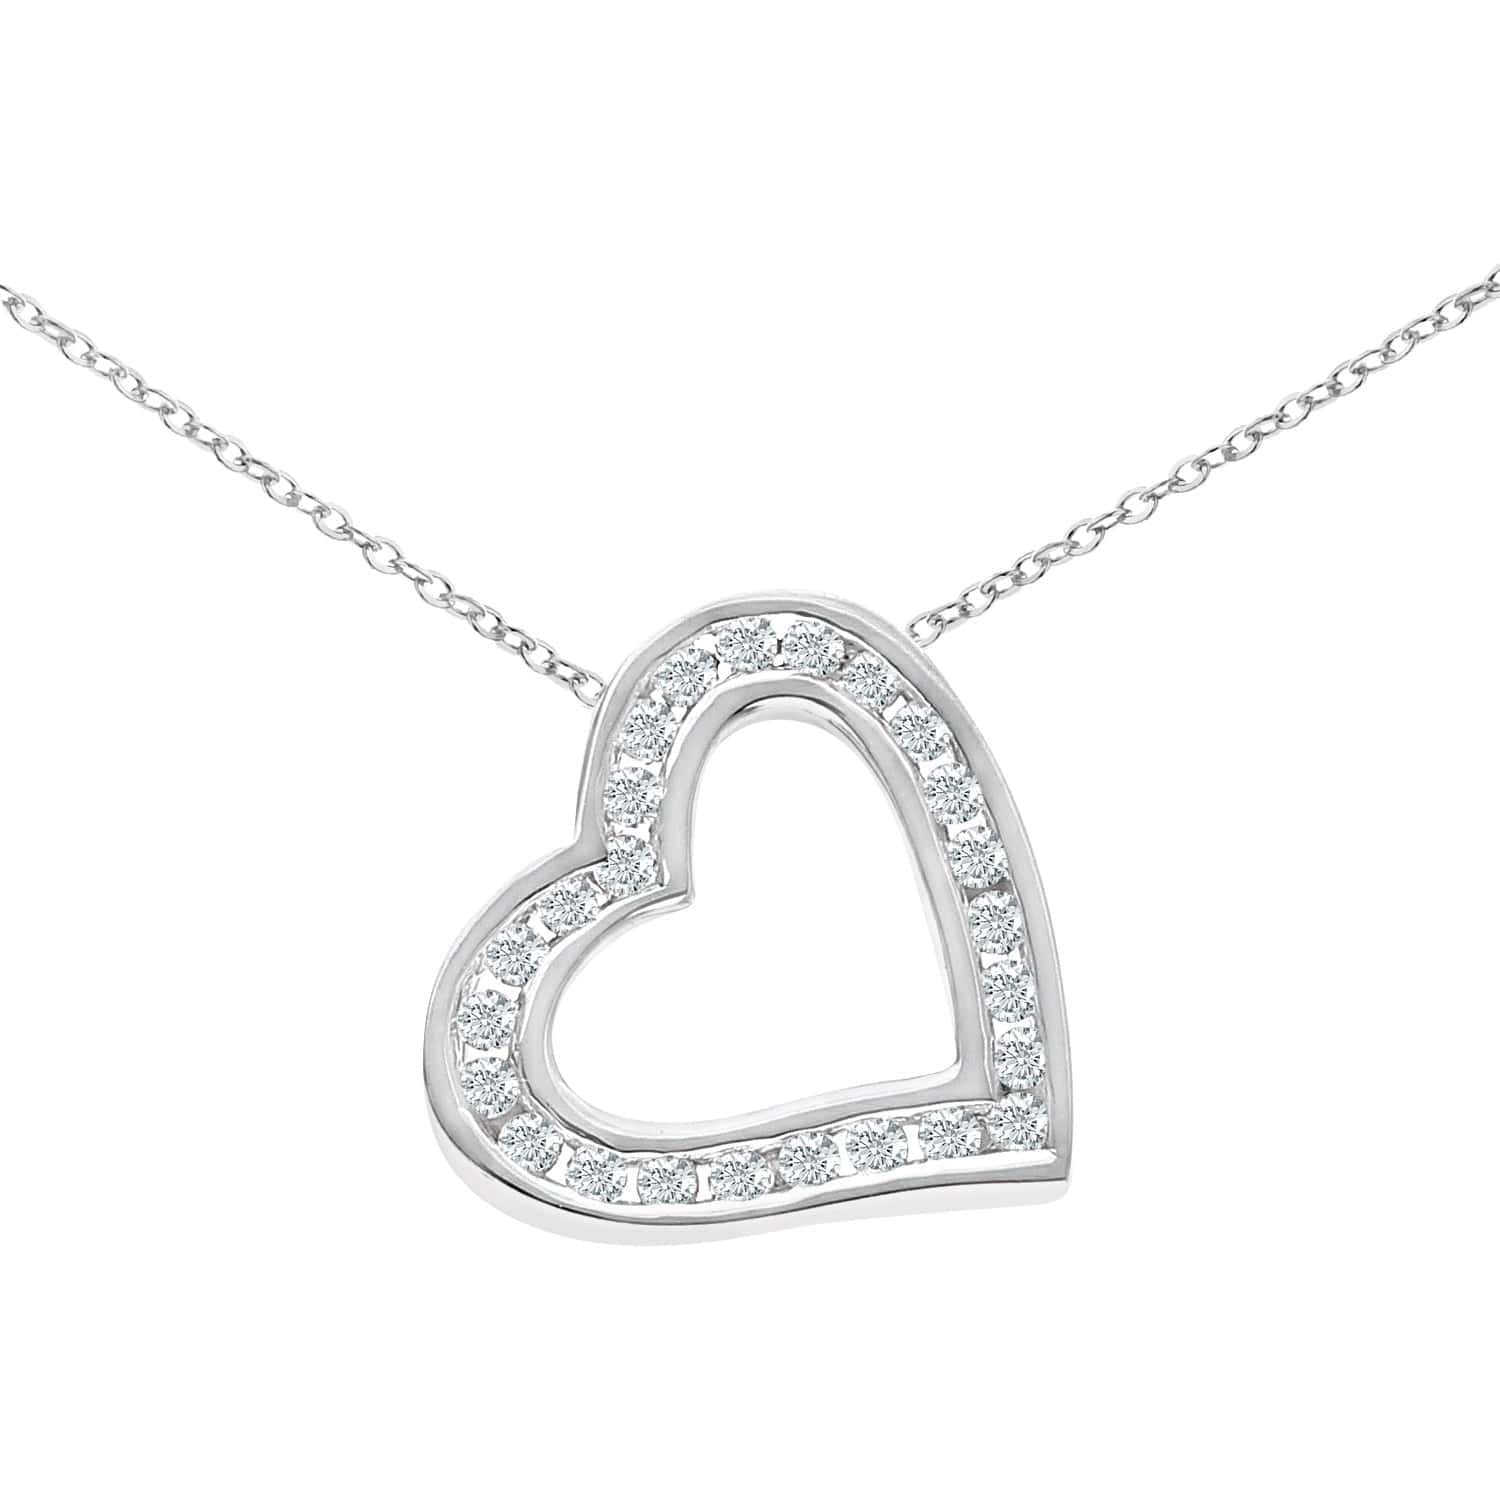 Lynora Luxe Pendant White Gold 9ct / Diamond 9ct White Gold 0.25ct Diamond Heart Pendant Necklace